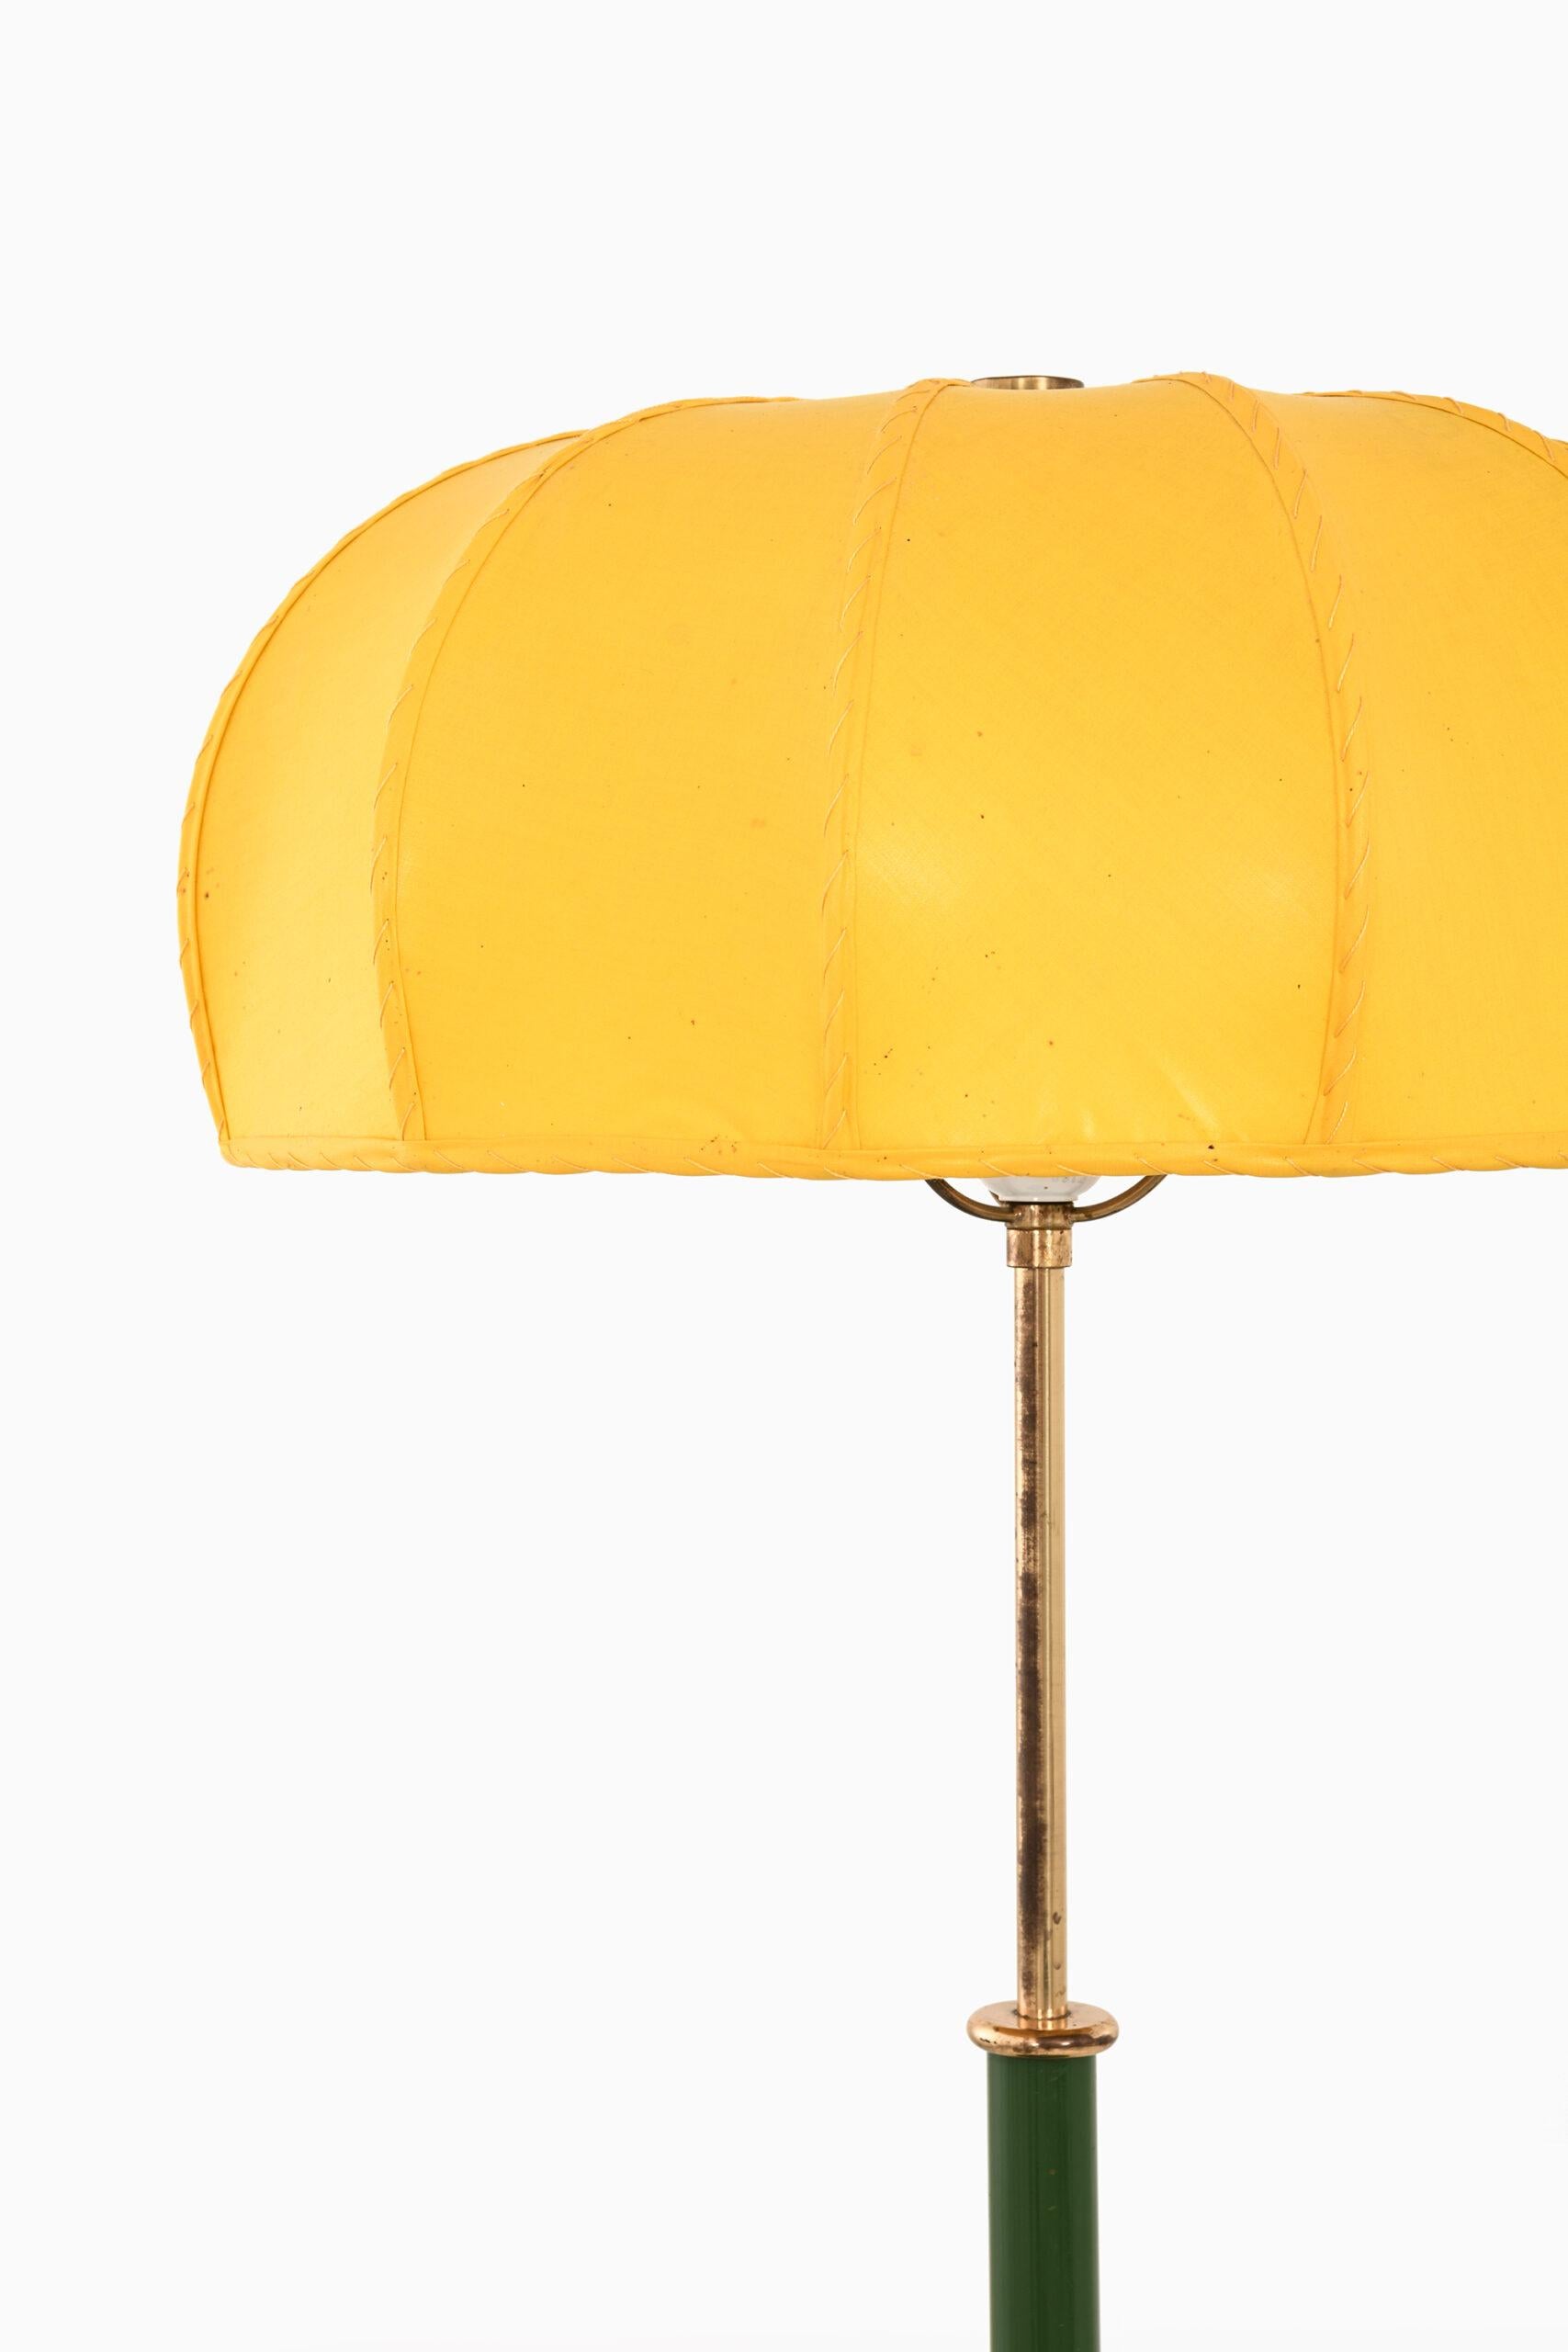 Rare table lamp model G-2466 designed by Josef Frank. Produced by Svenskt Tenn in Sweden.